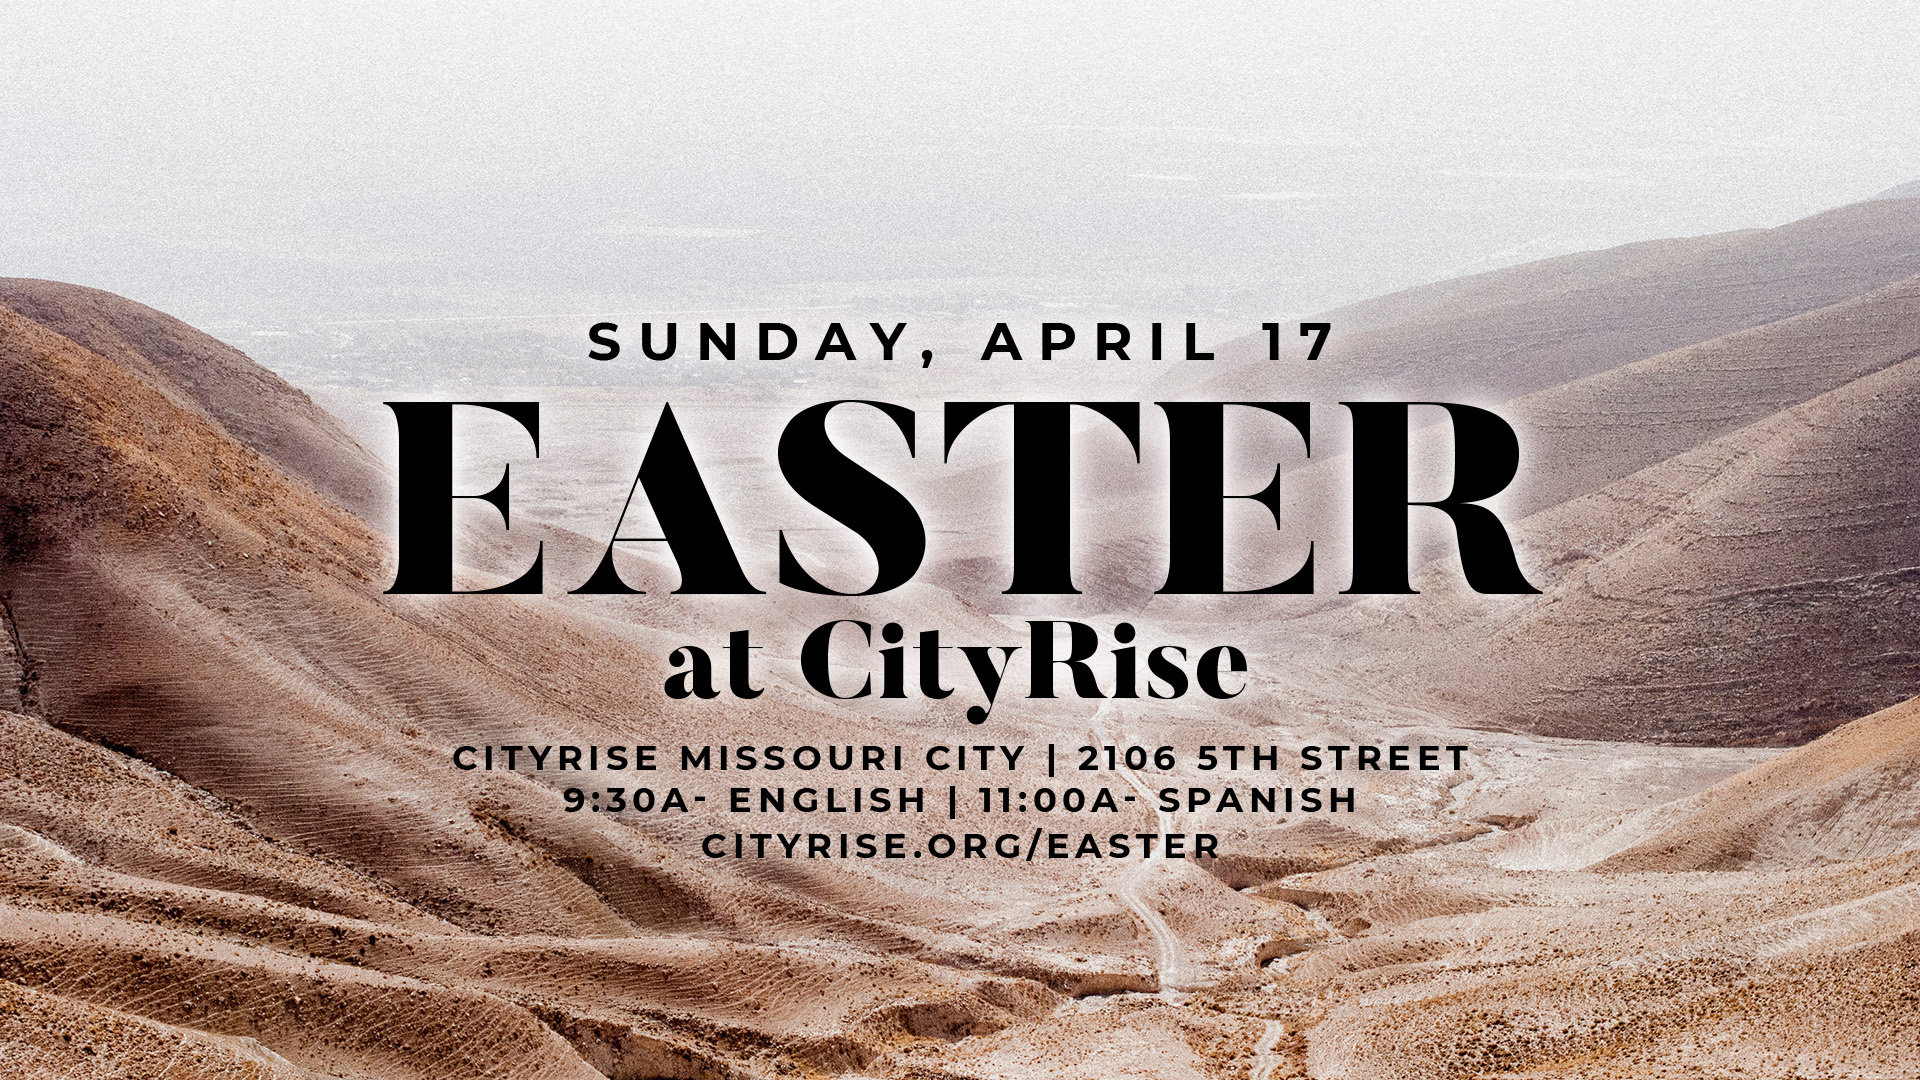 Sunday April 17, Easter at CityRise